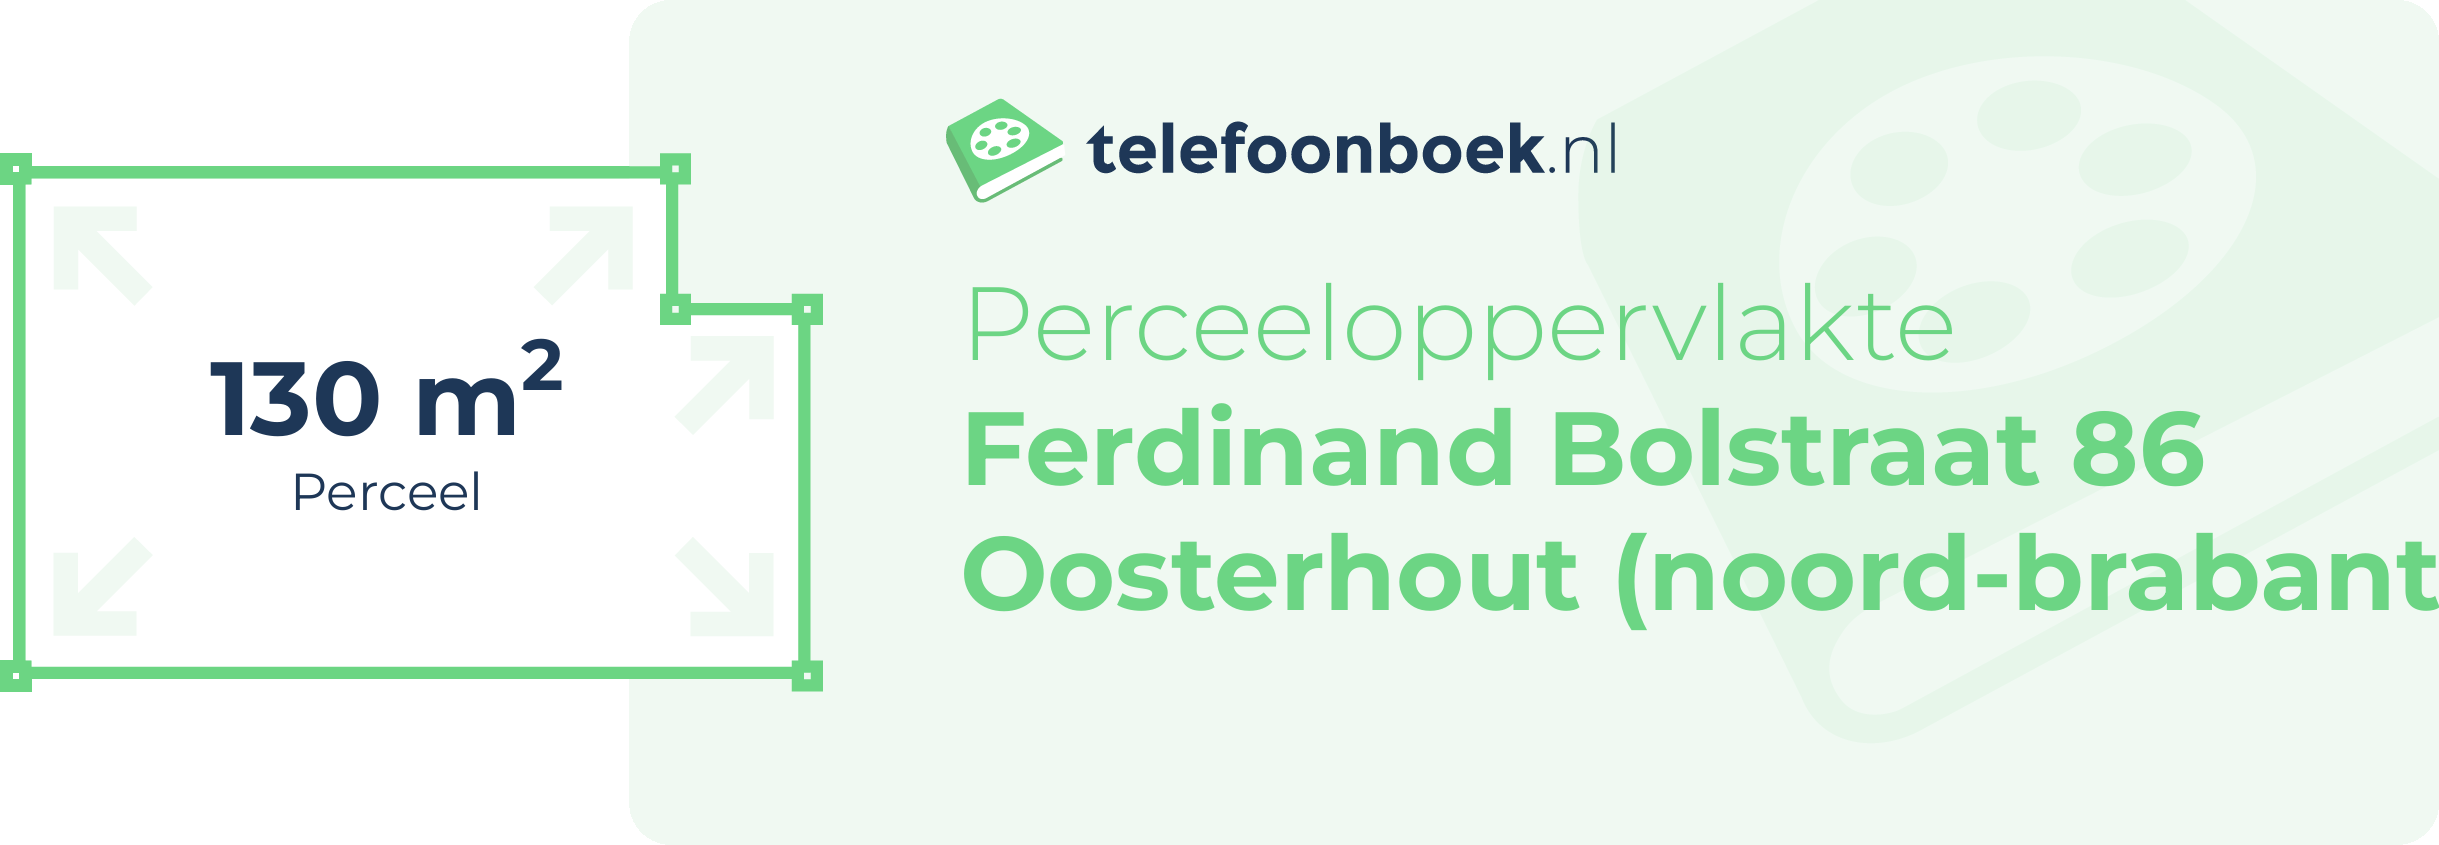 Perceeloppervlakte Ferdinand Bolstraat 86 Oosterhout (Noord-Brabant)